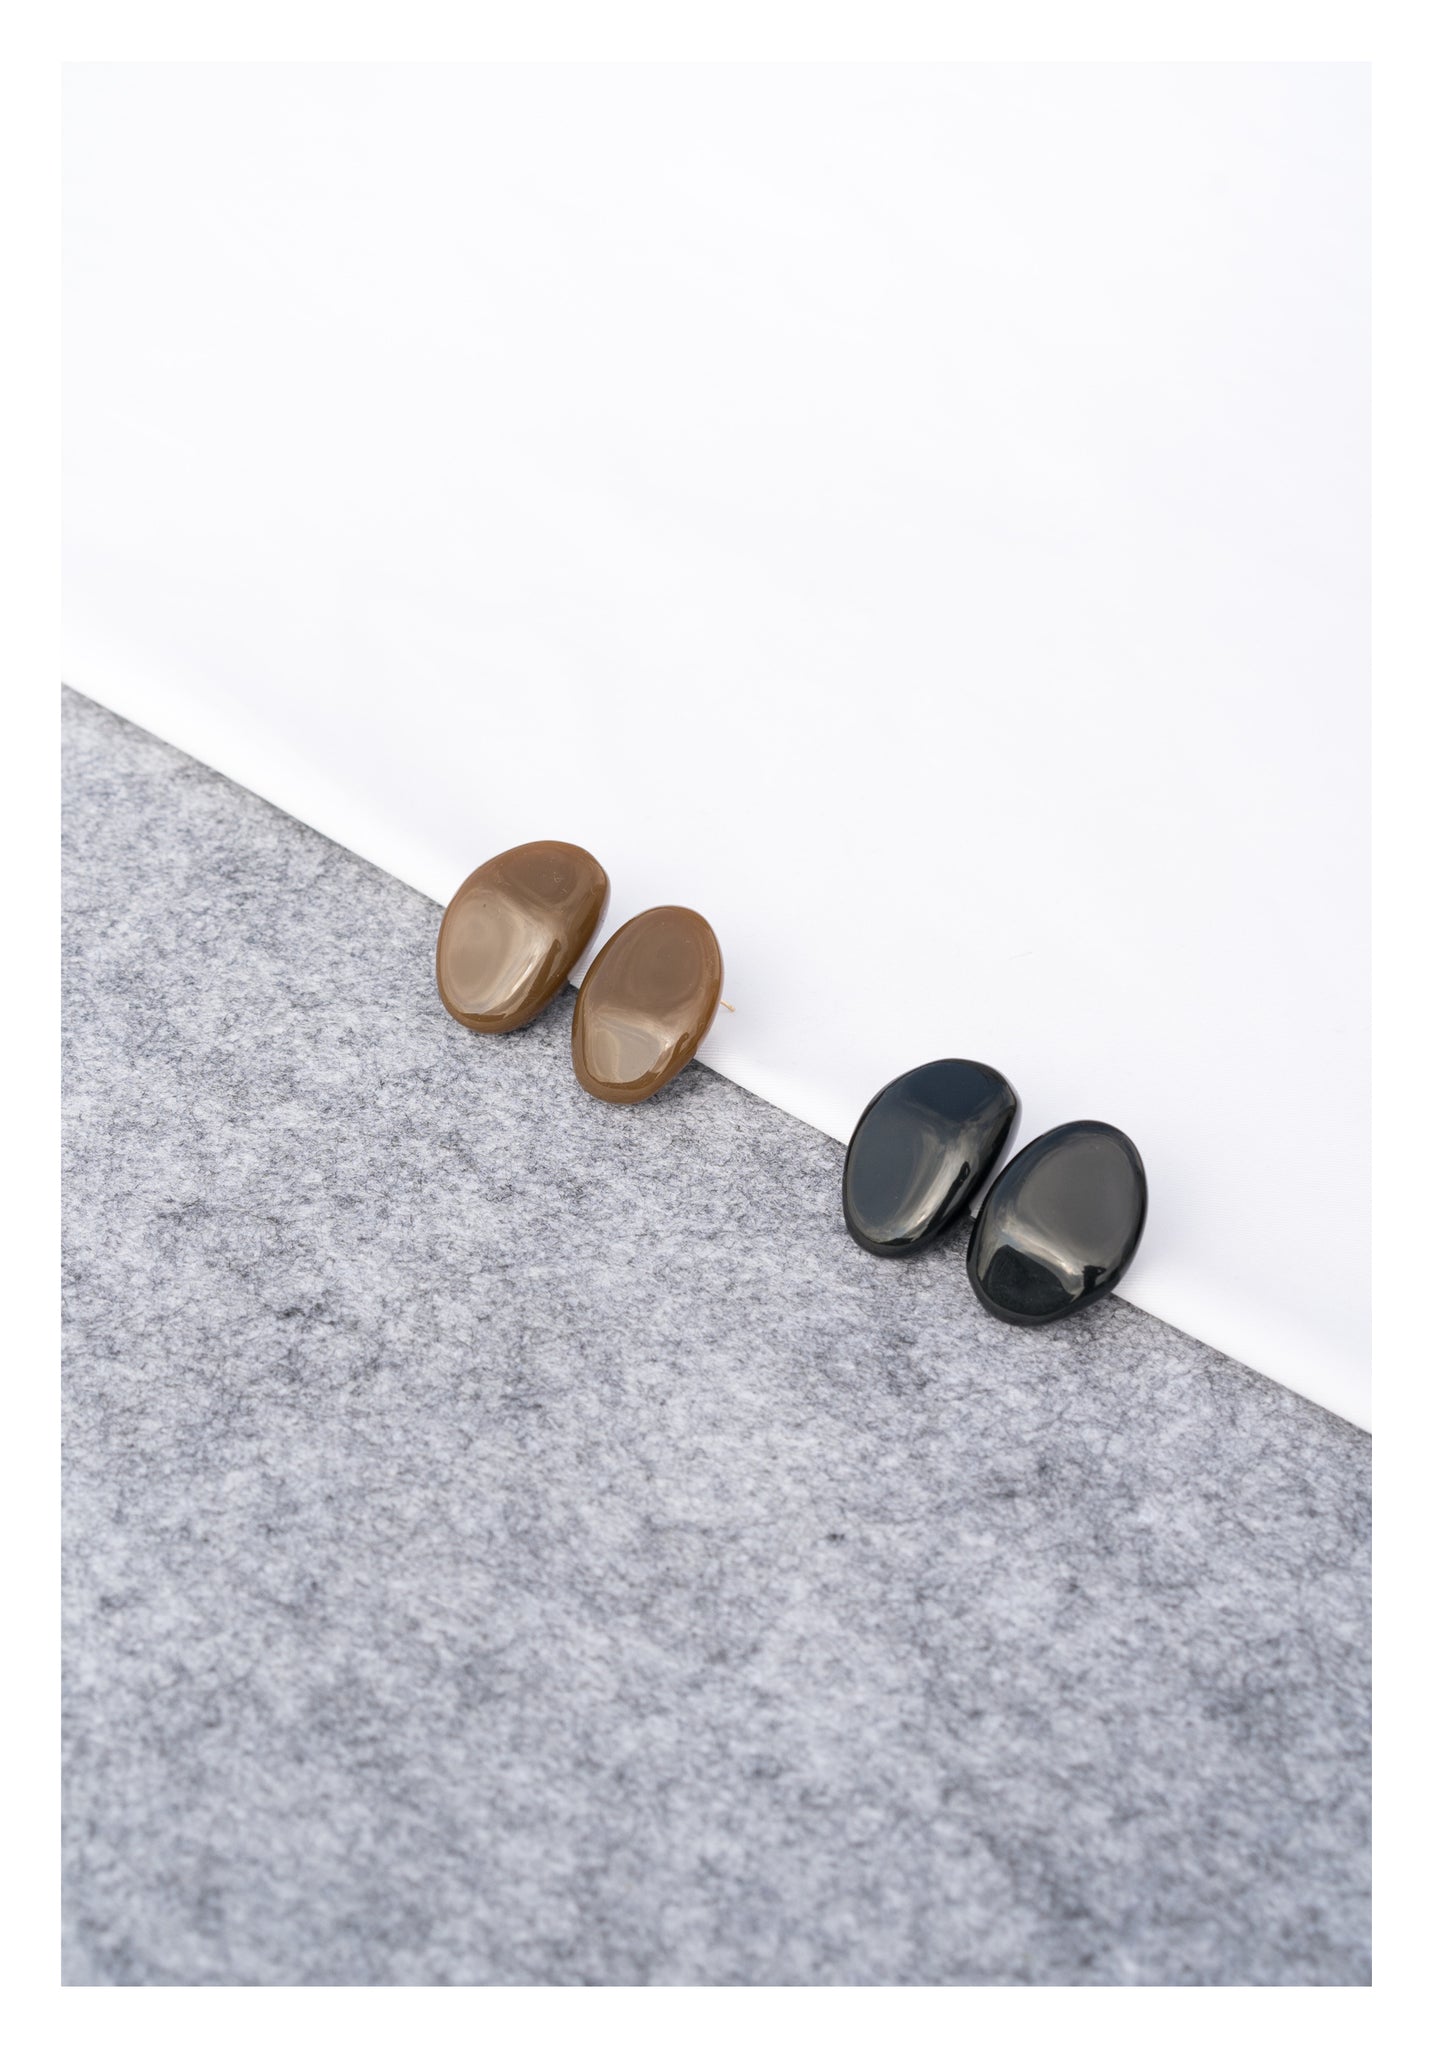 Resin Stone Earrings Black - whoami